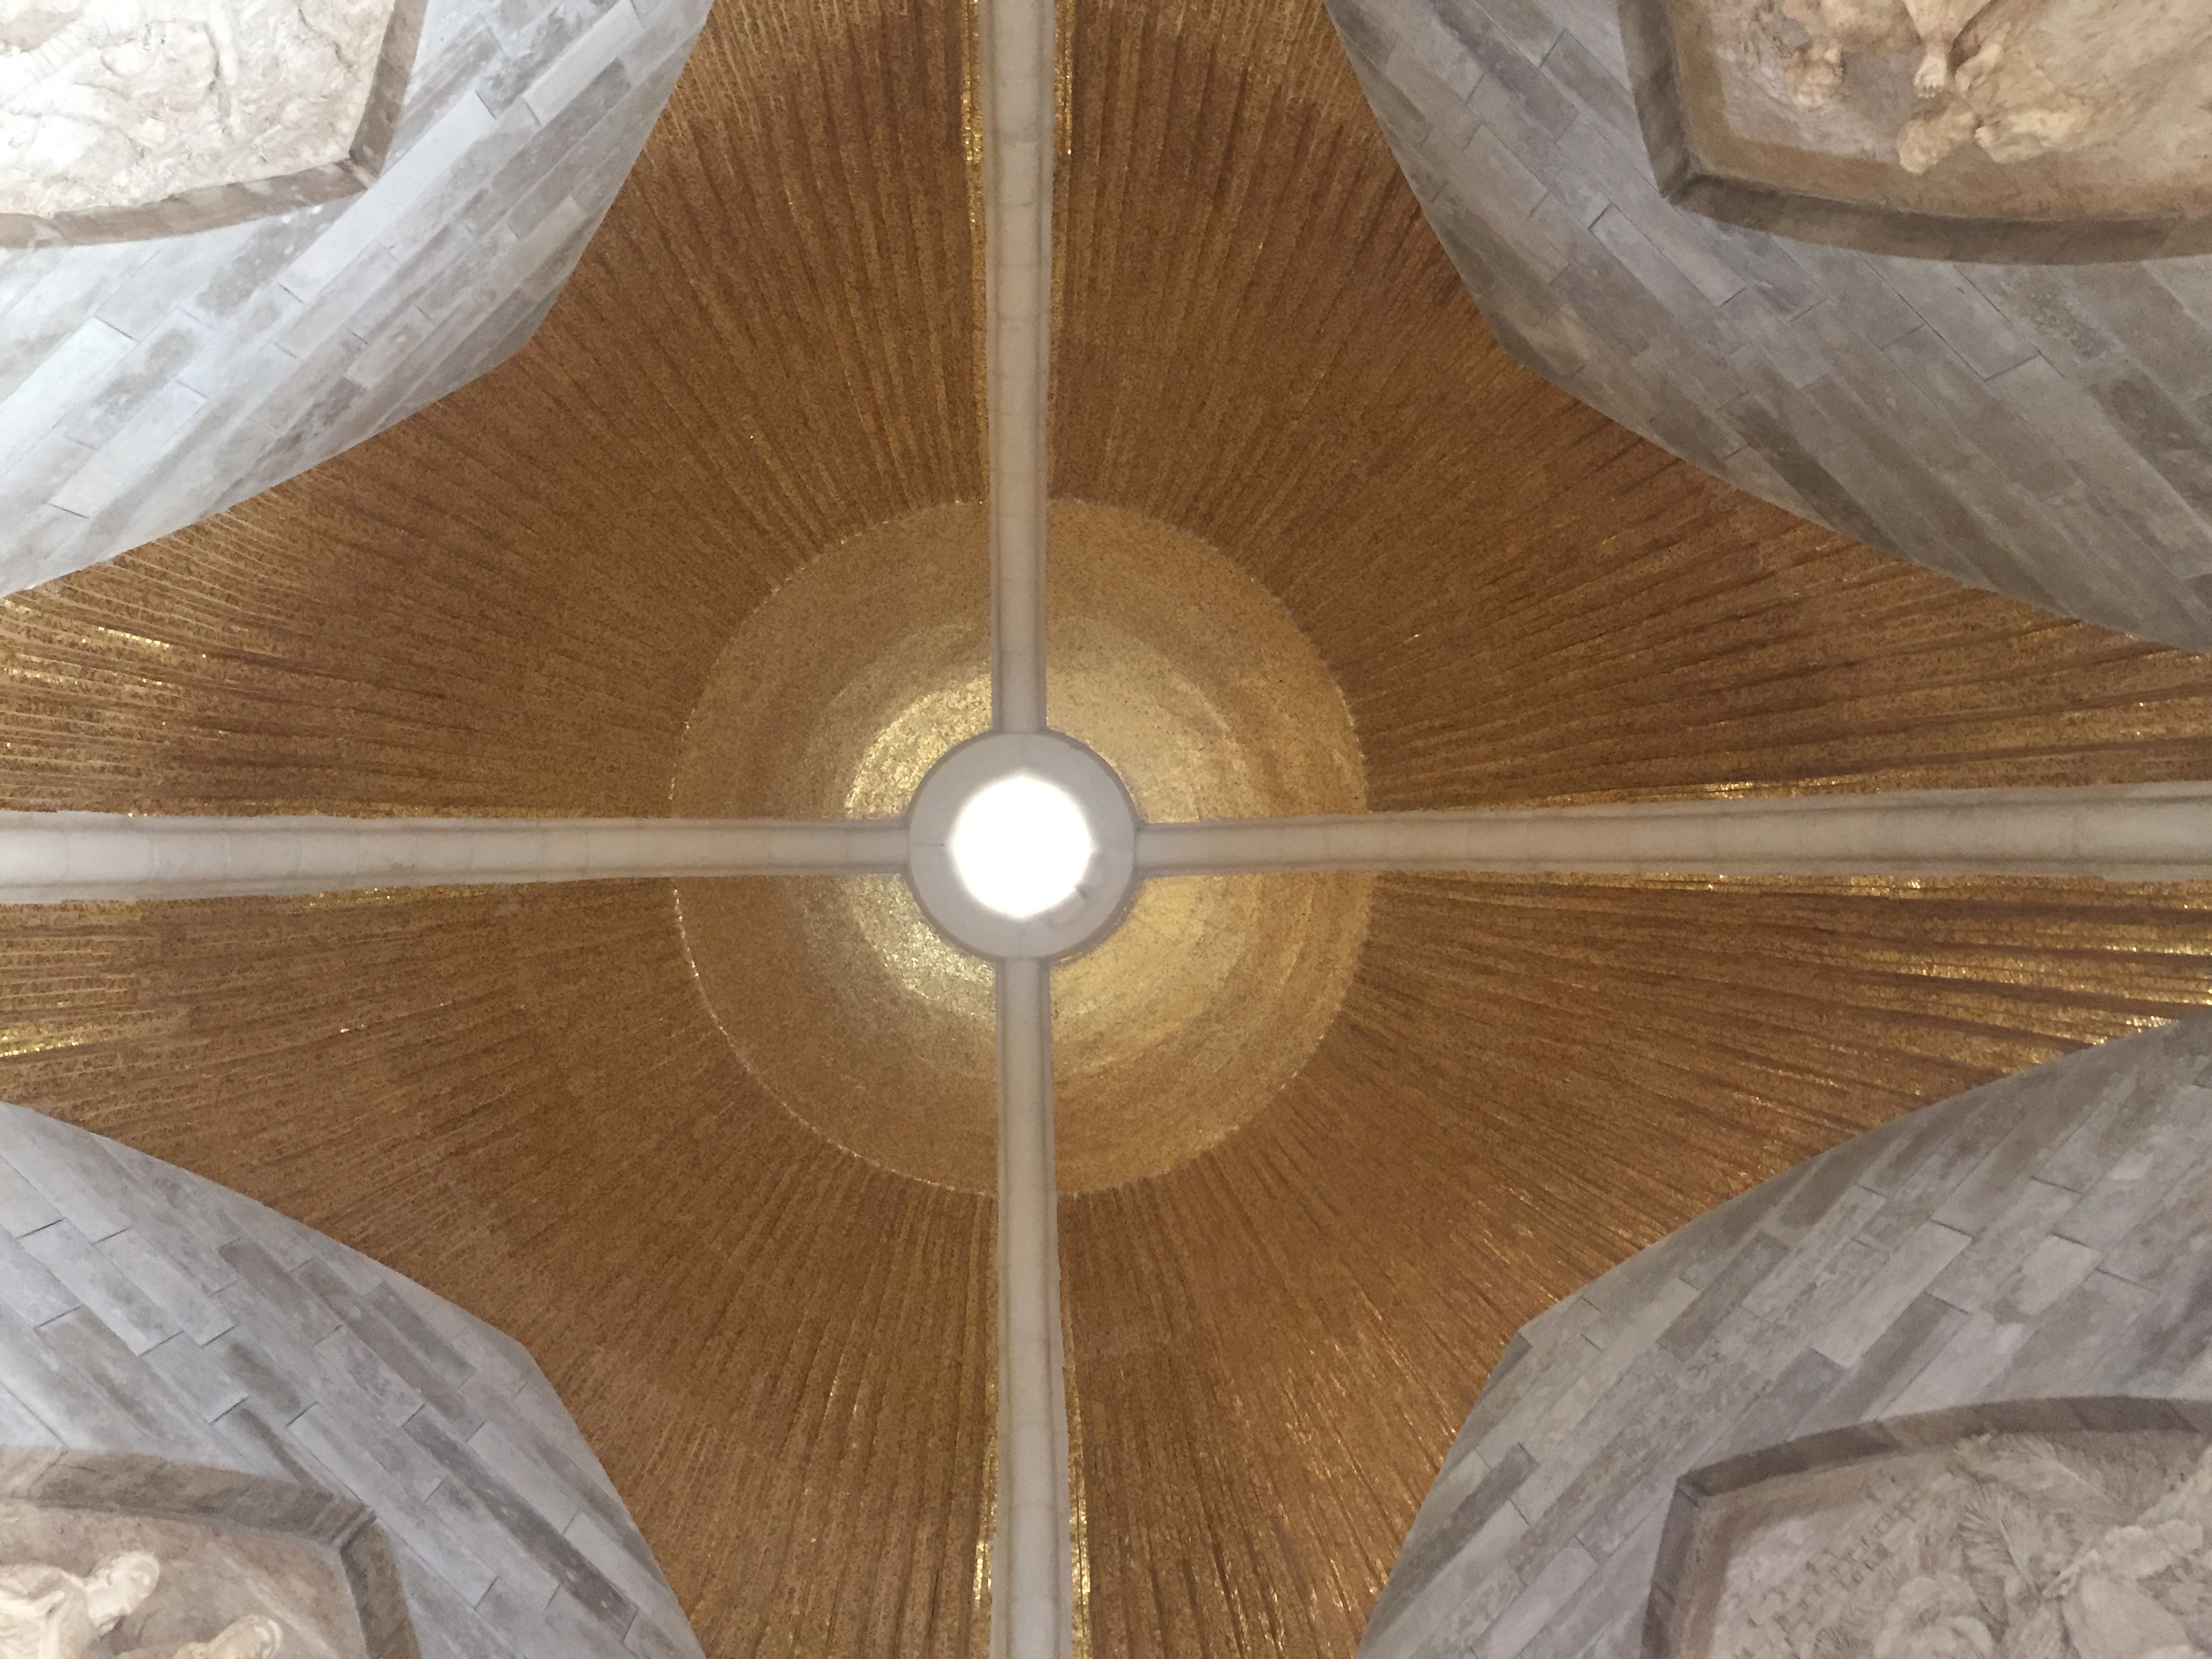 Kuppel der Kirche "Dominus Flevit" in Jerusalem